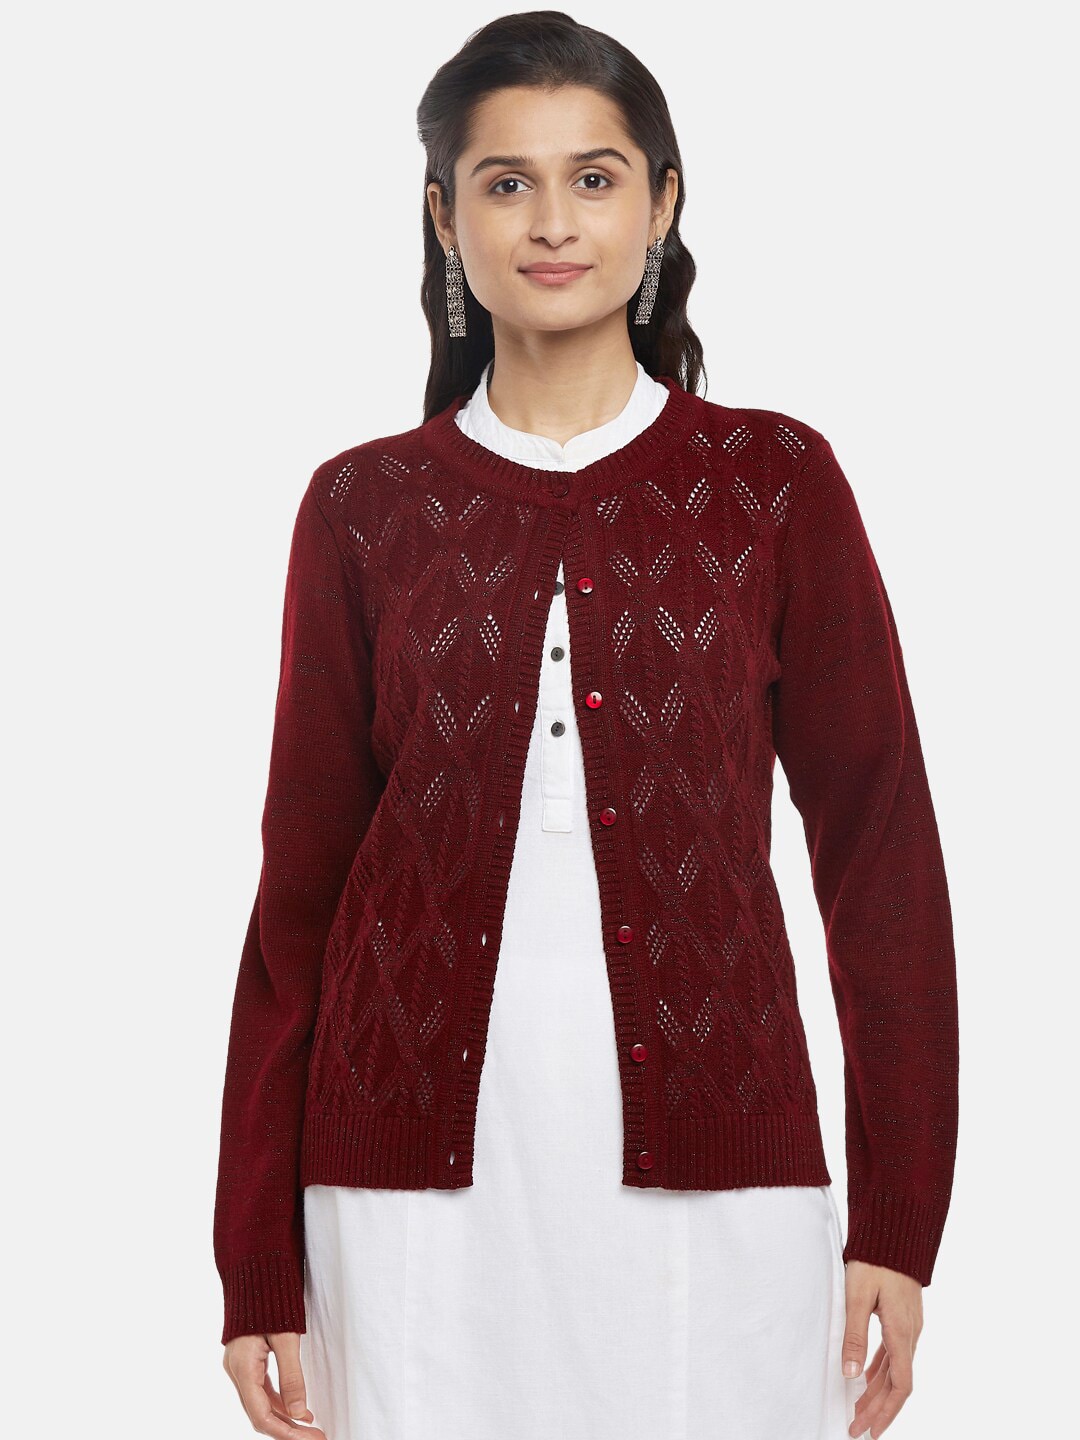 RANGMANCH BY PANTALOONS Women Maroon Self Design Cardigan Price in India